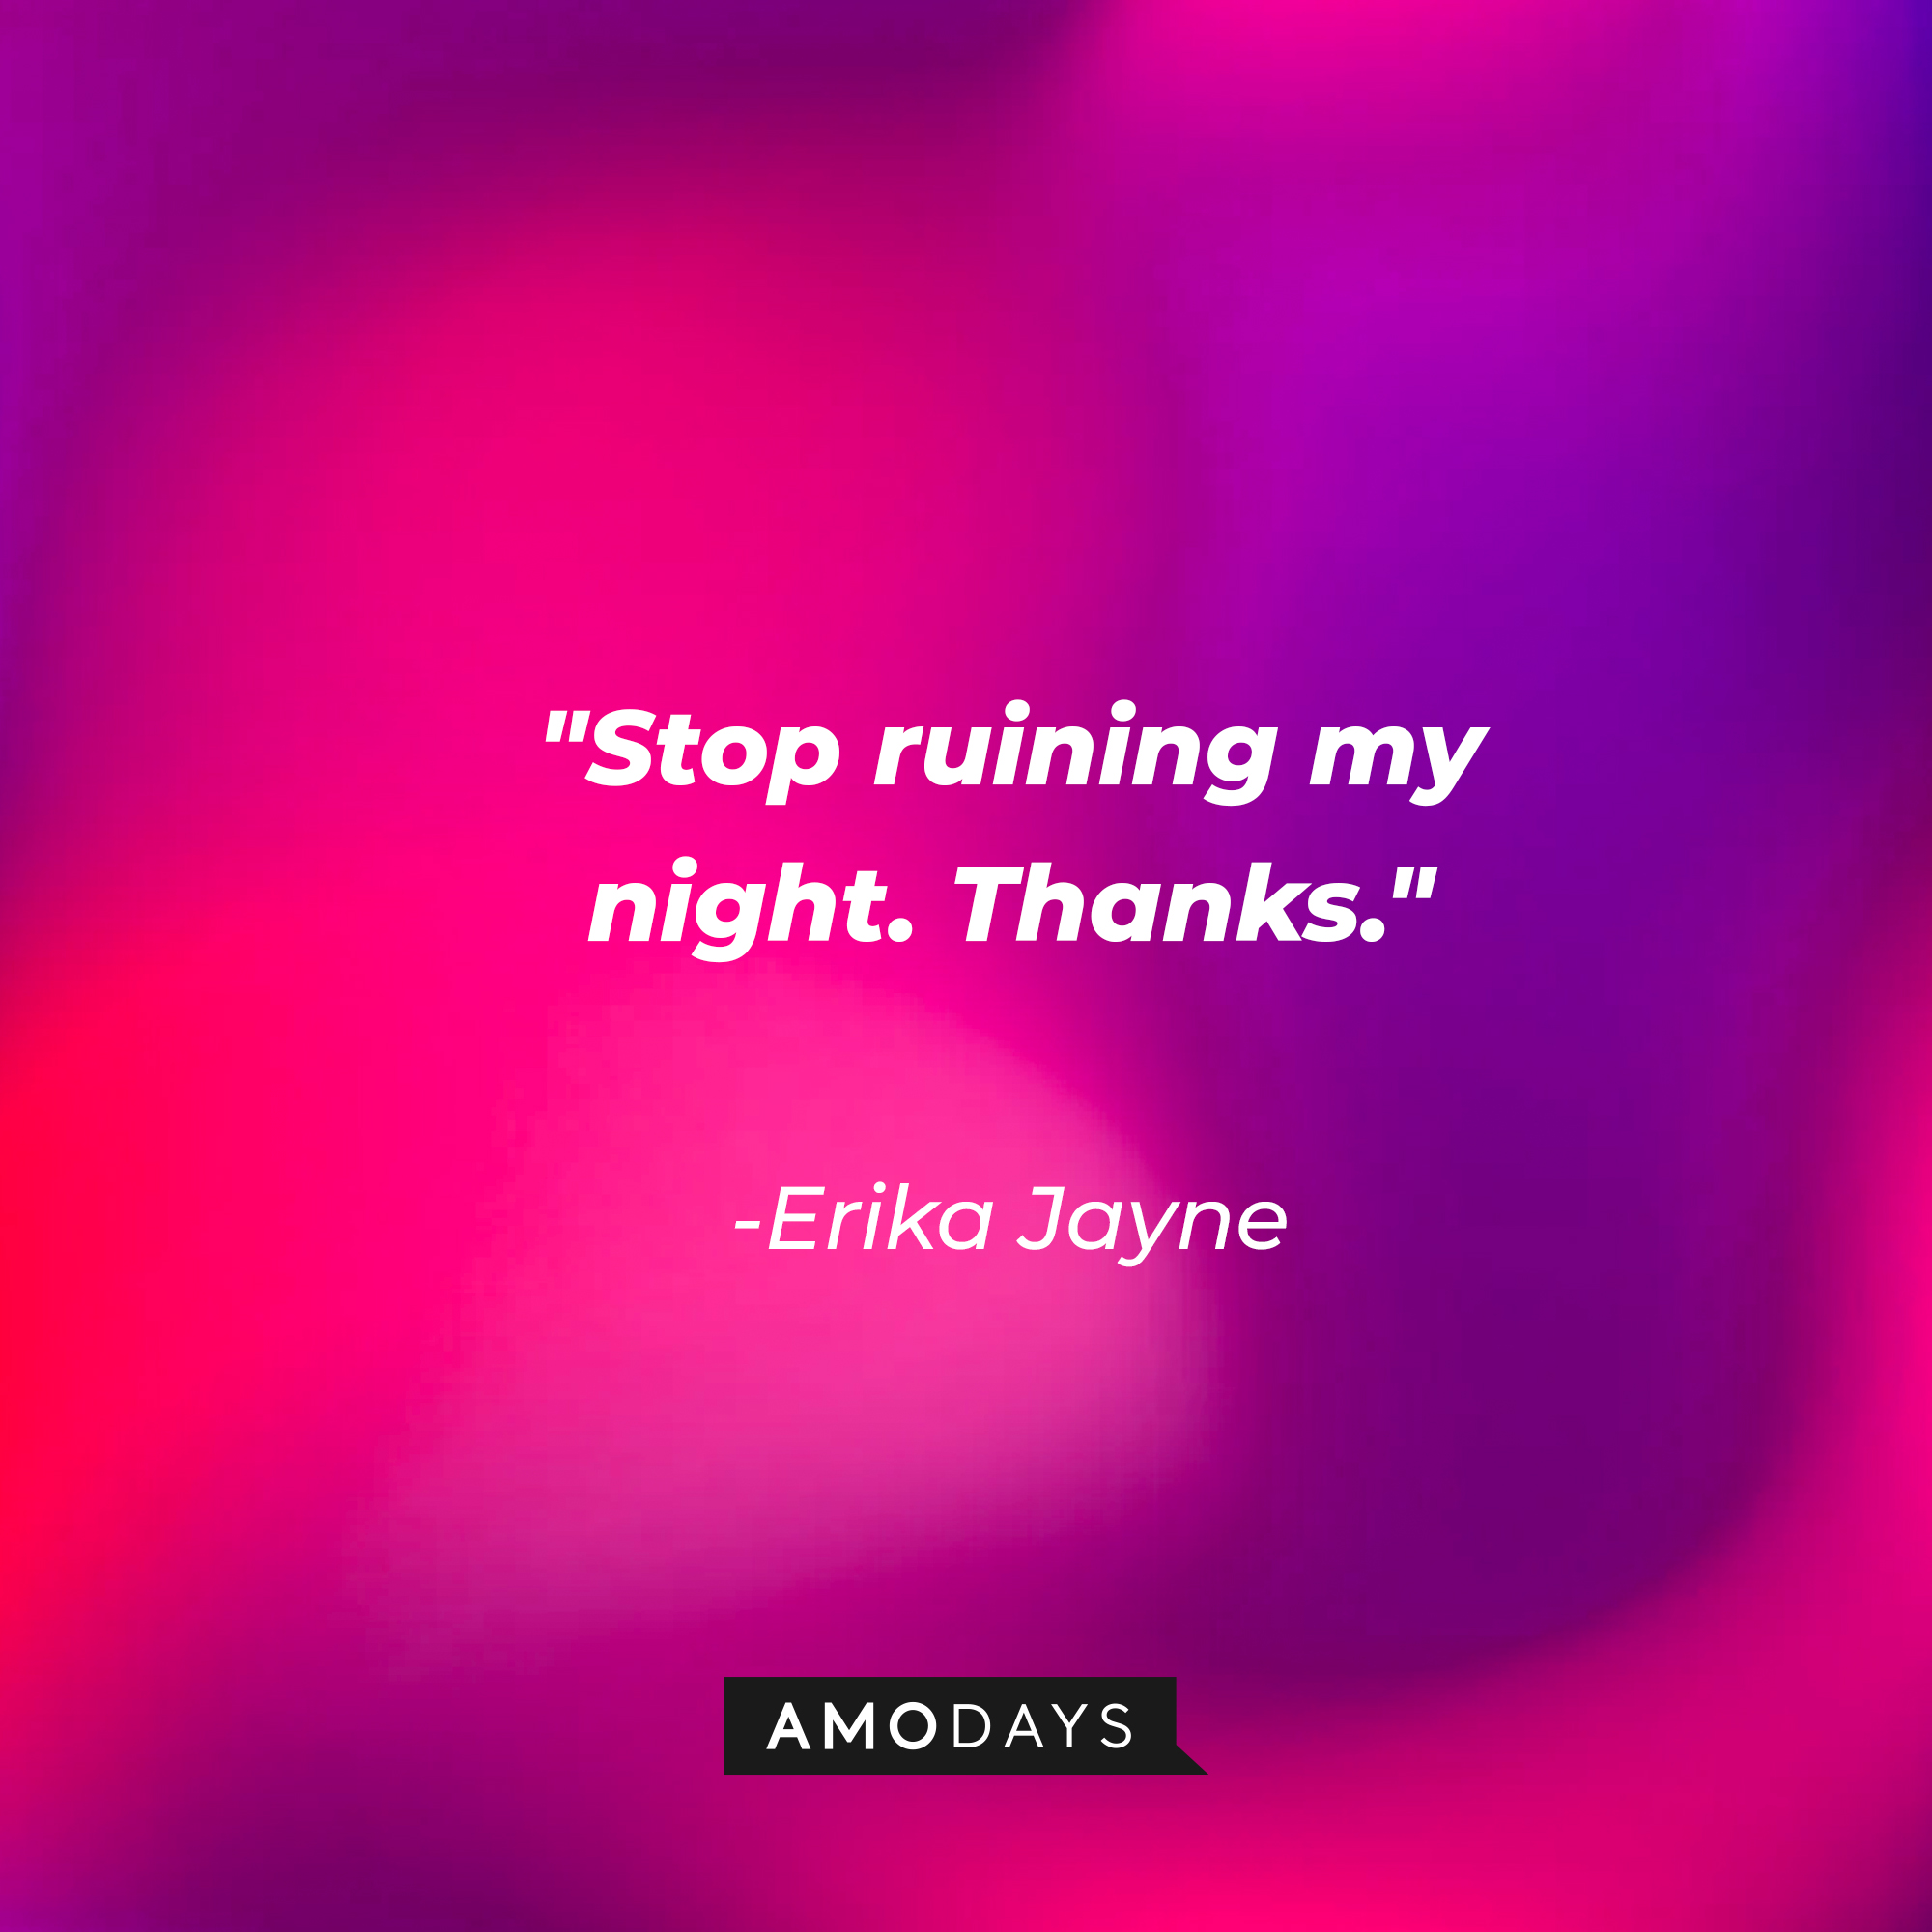 Erika Jayne’s quote: "Stop ruining my night. Thanks." | Image: Amodays